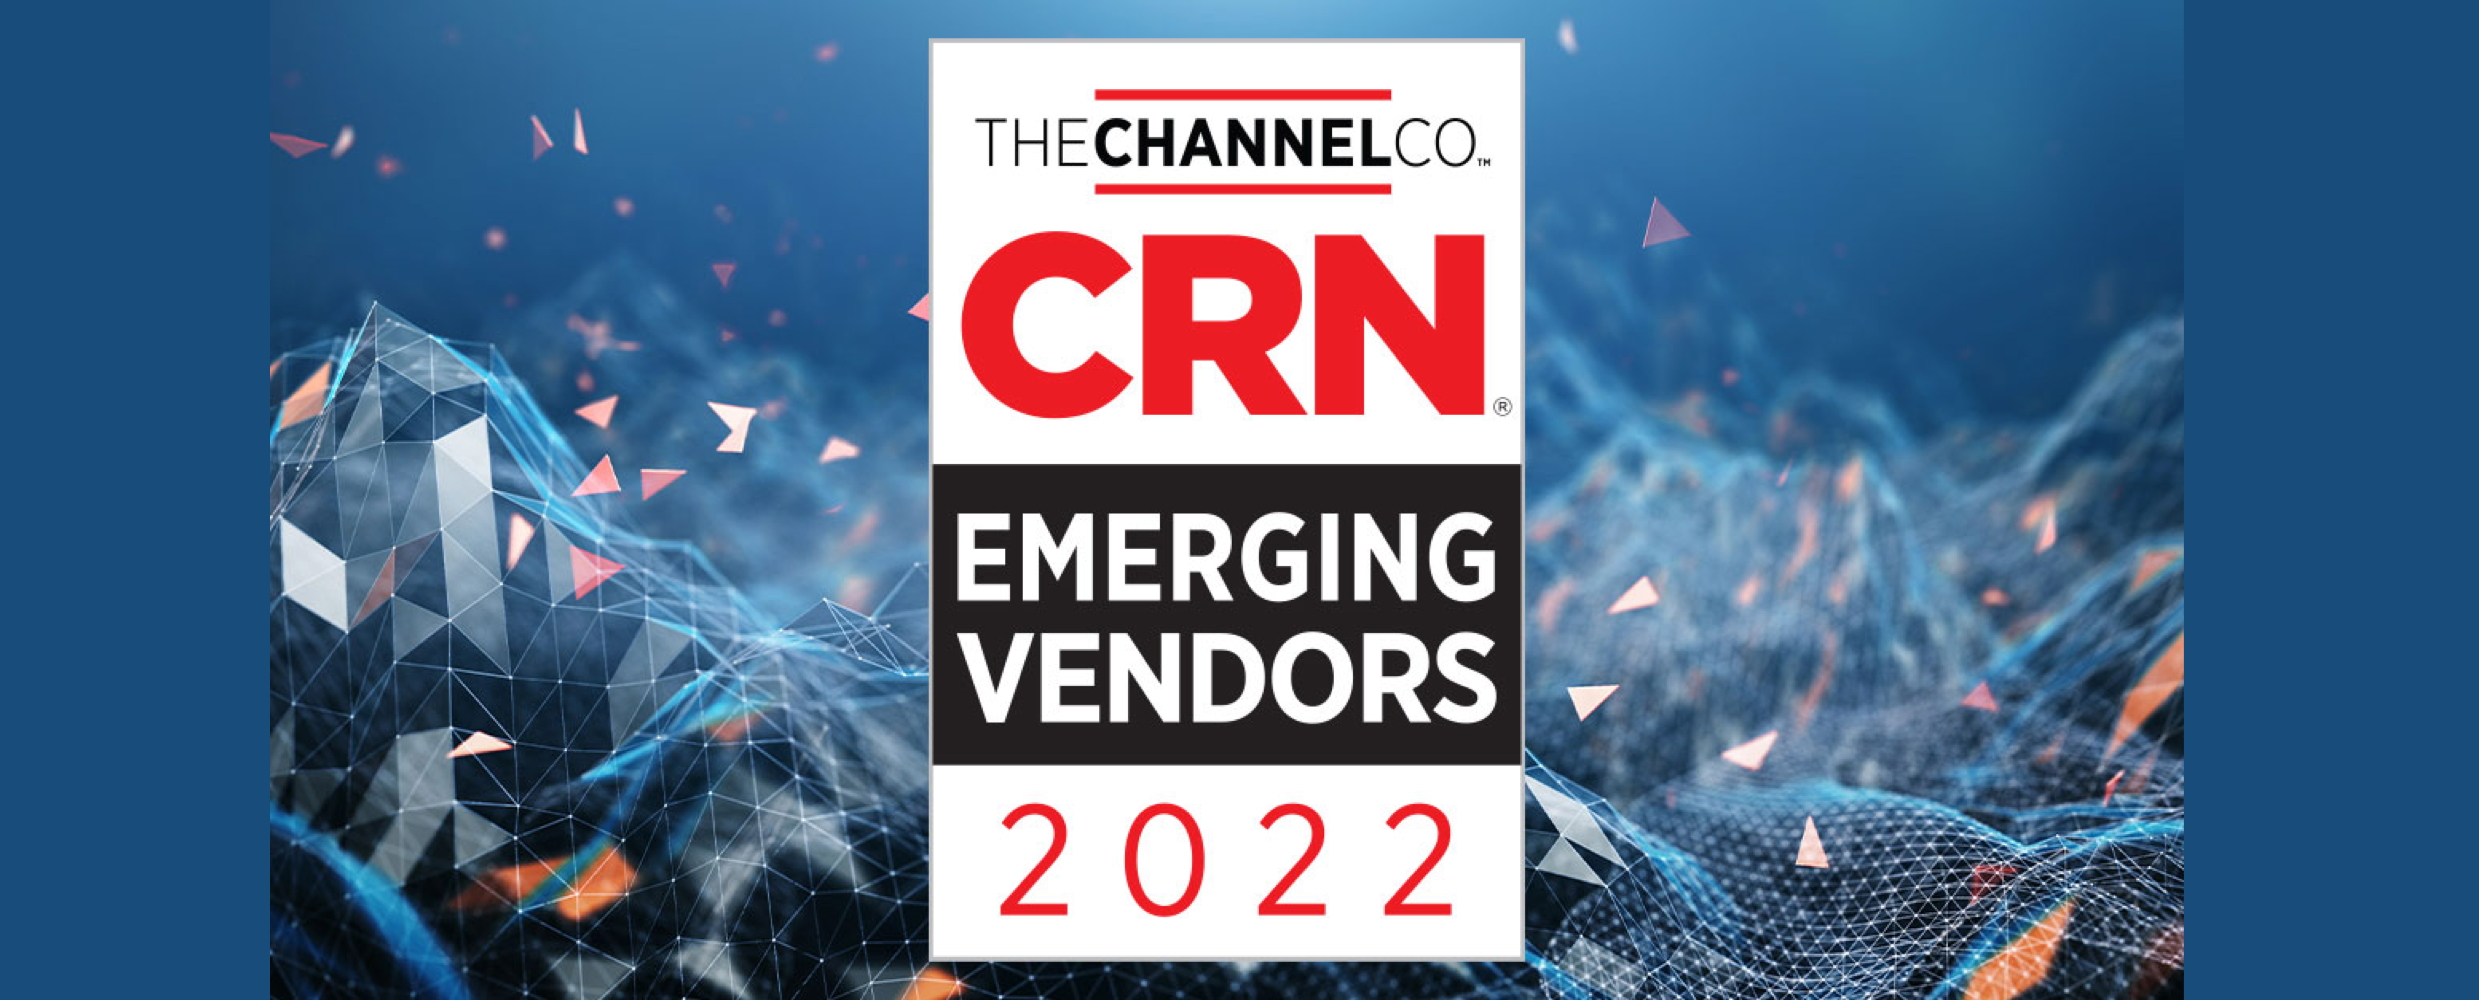 CRN Recognizes Calamu as an Emerging Vendor for 2022